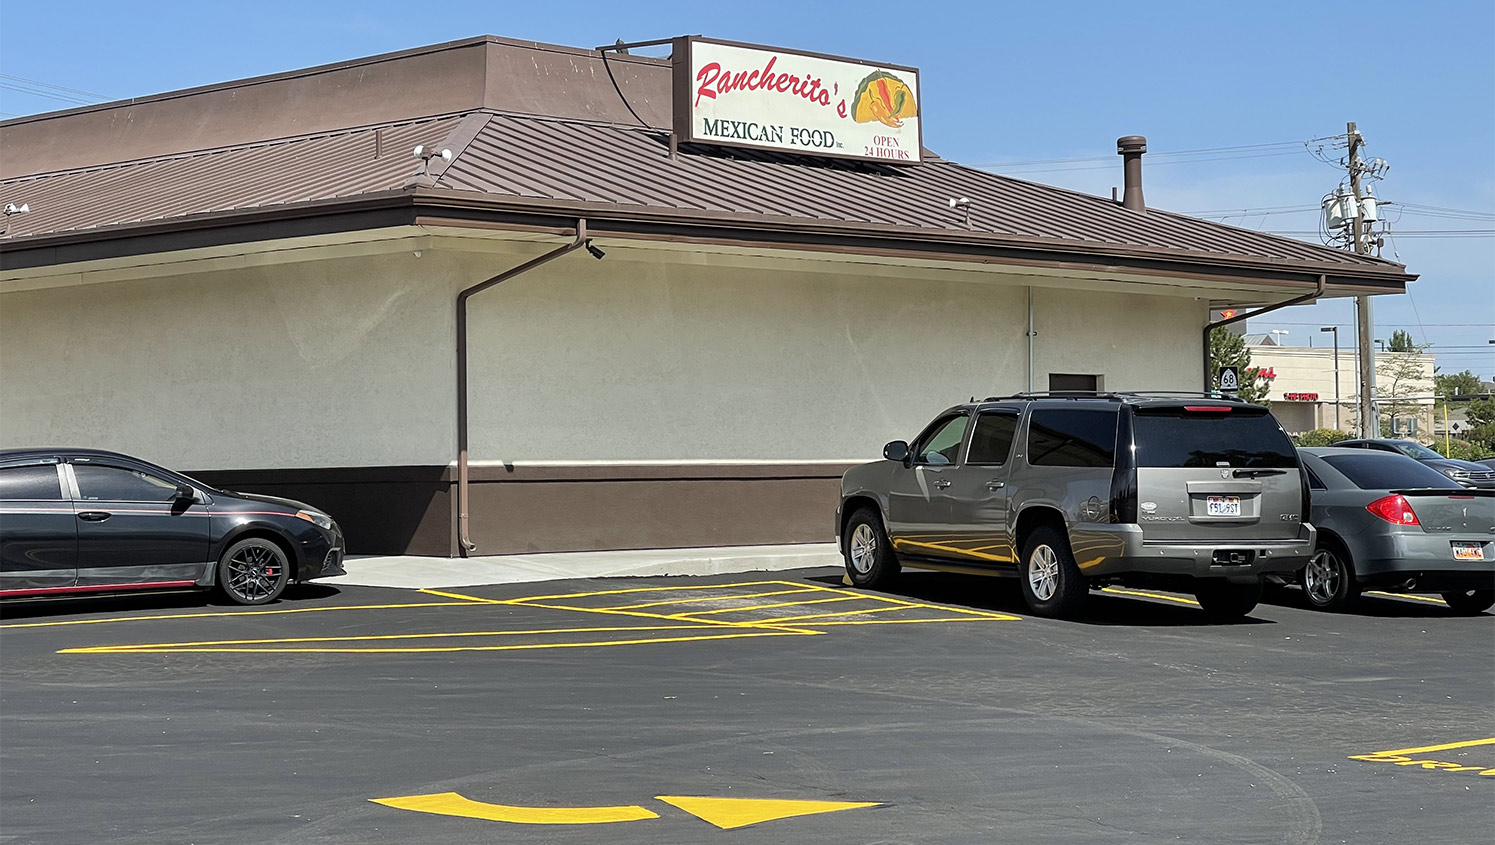 Re-striped parking lot arrows at Racherito’s Mexican Food in West Jordan, Utah